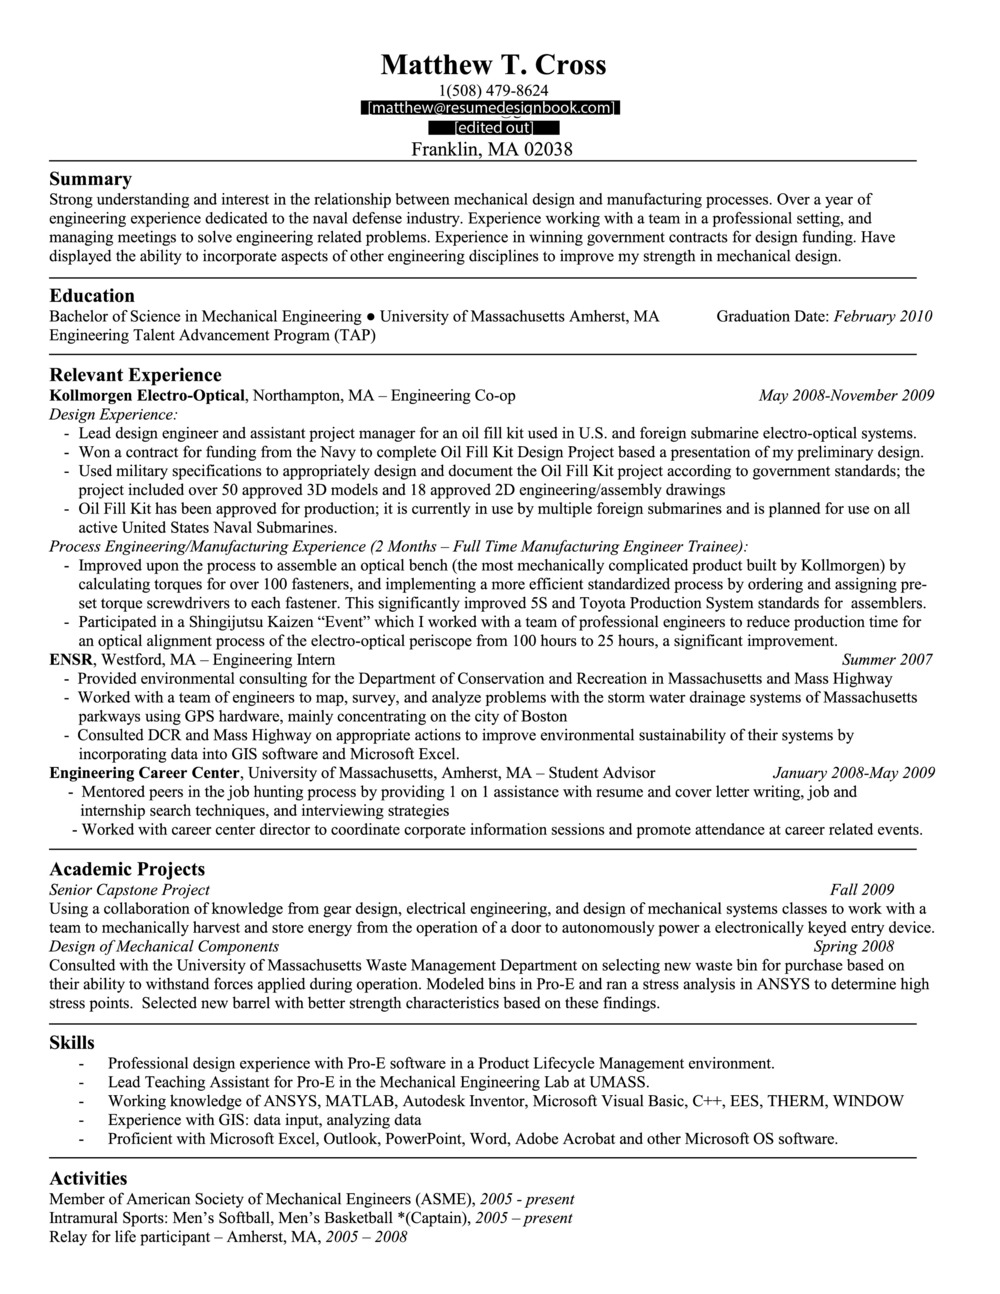 format examples  u2014 the resume design book